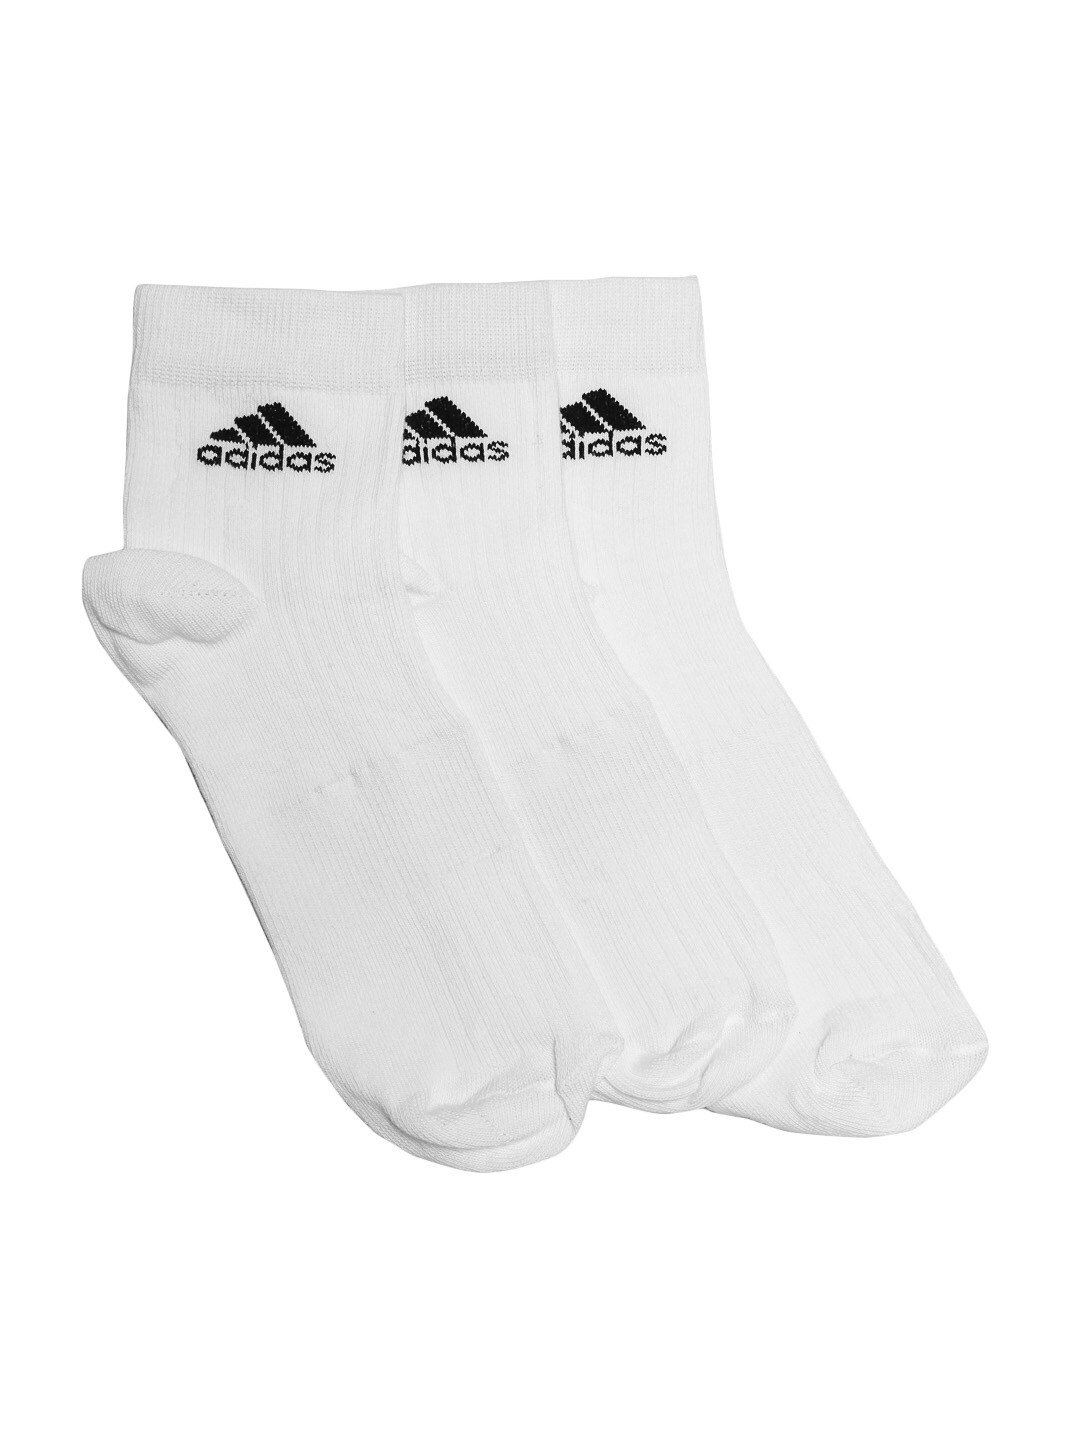 ADIDAS Unisex White Pack of 3 Ankle Socks